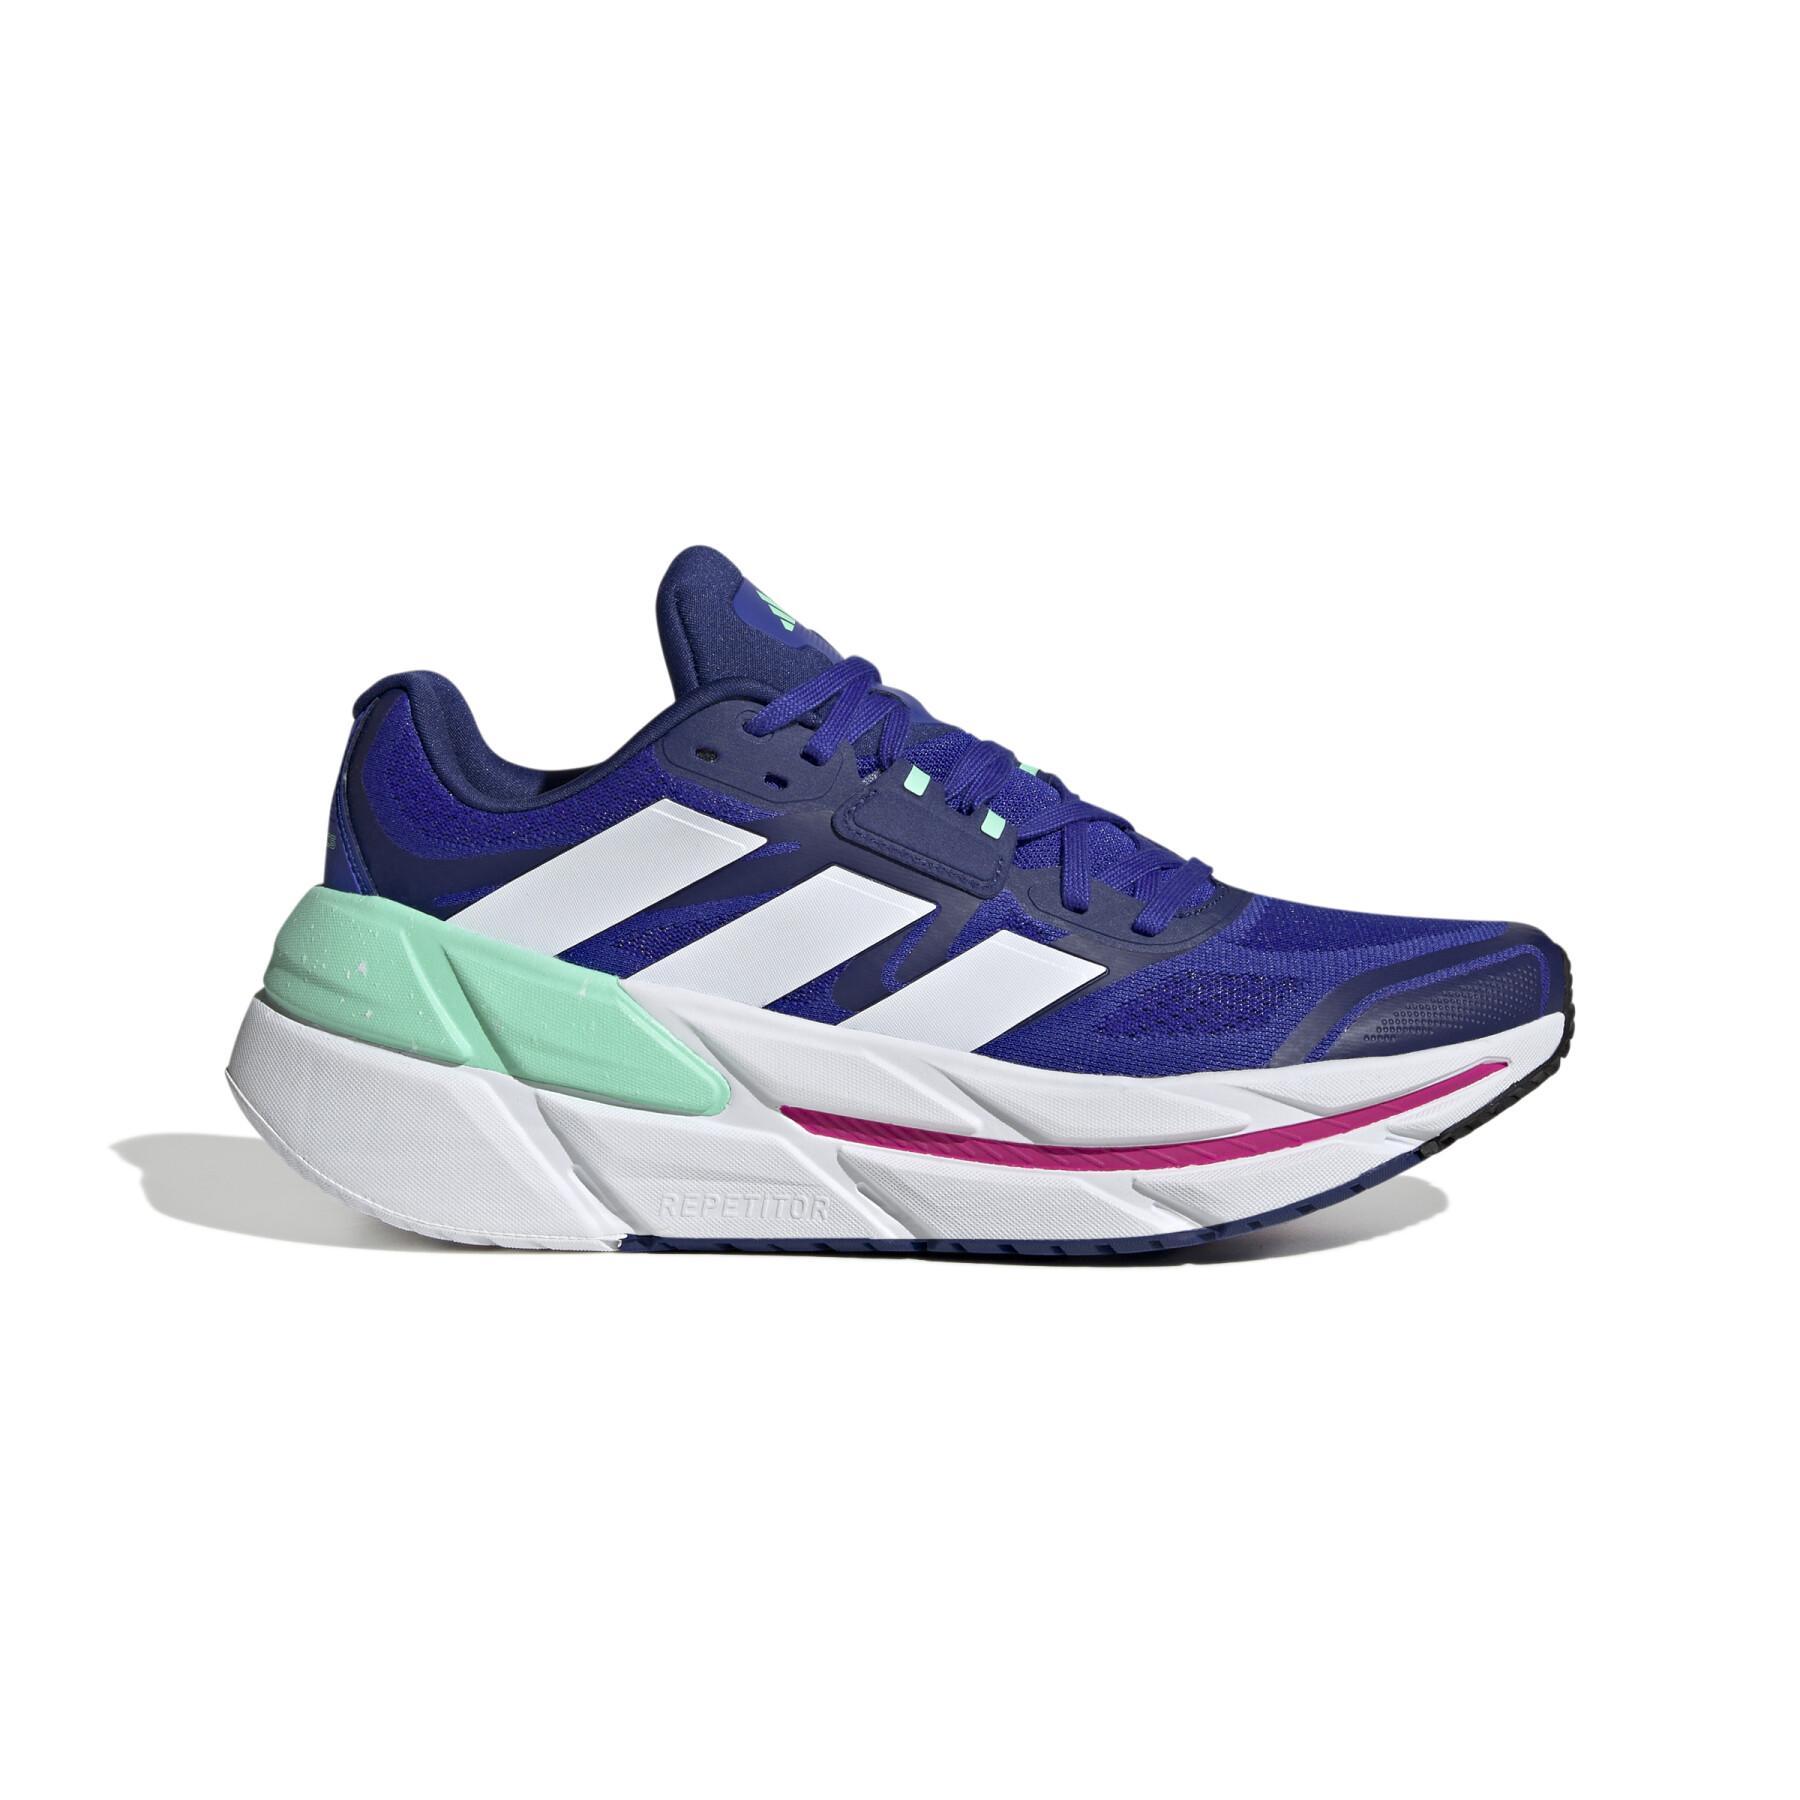 Running shoes adidas Adistar CS